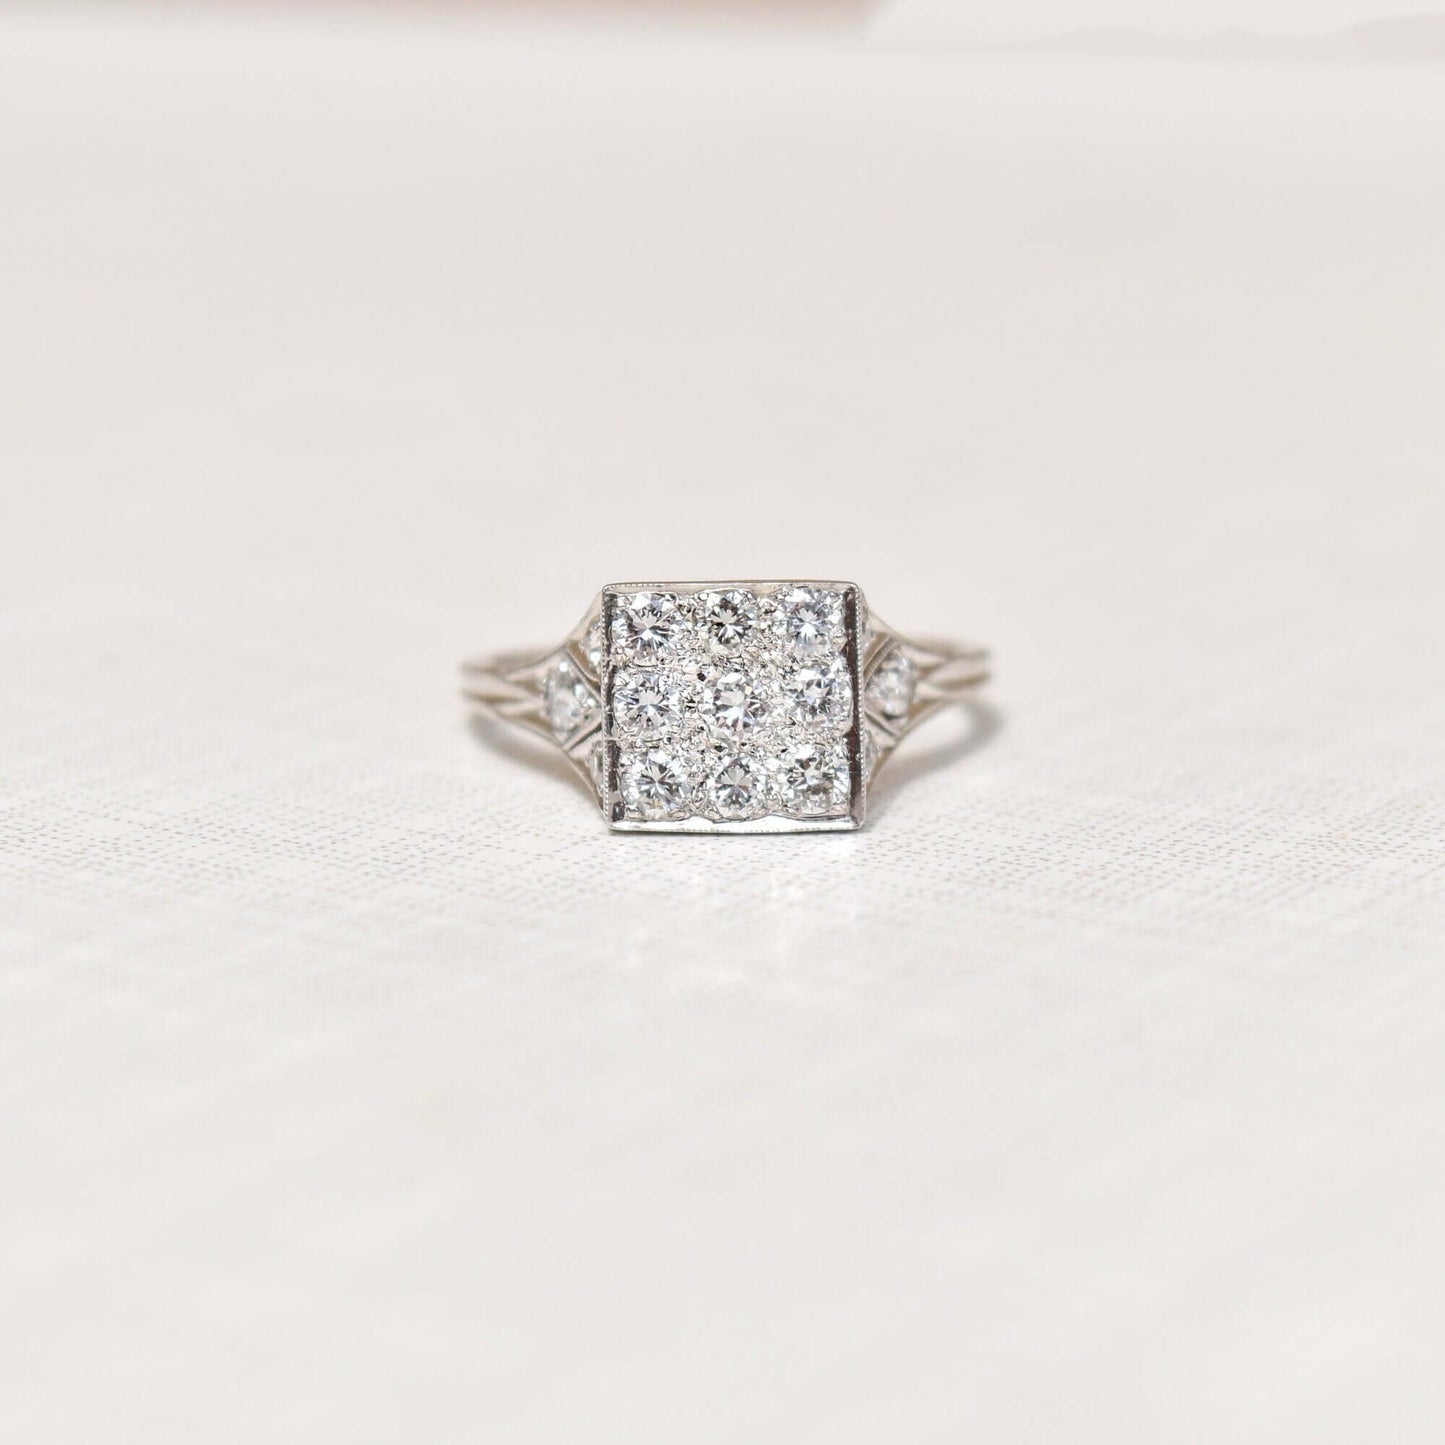 Edwardian Revival Platinum Diamond Grid Ring, .36 TCW, Square Cluster Ring, Estate Jewelry, Size 7 US - Good's Vintage